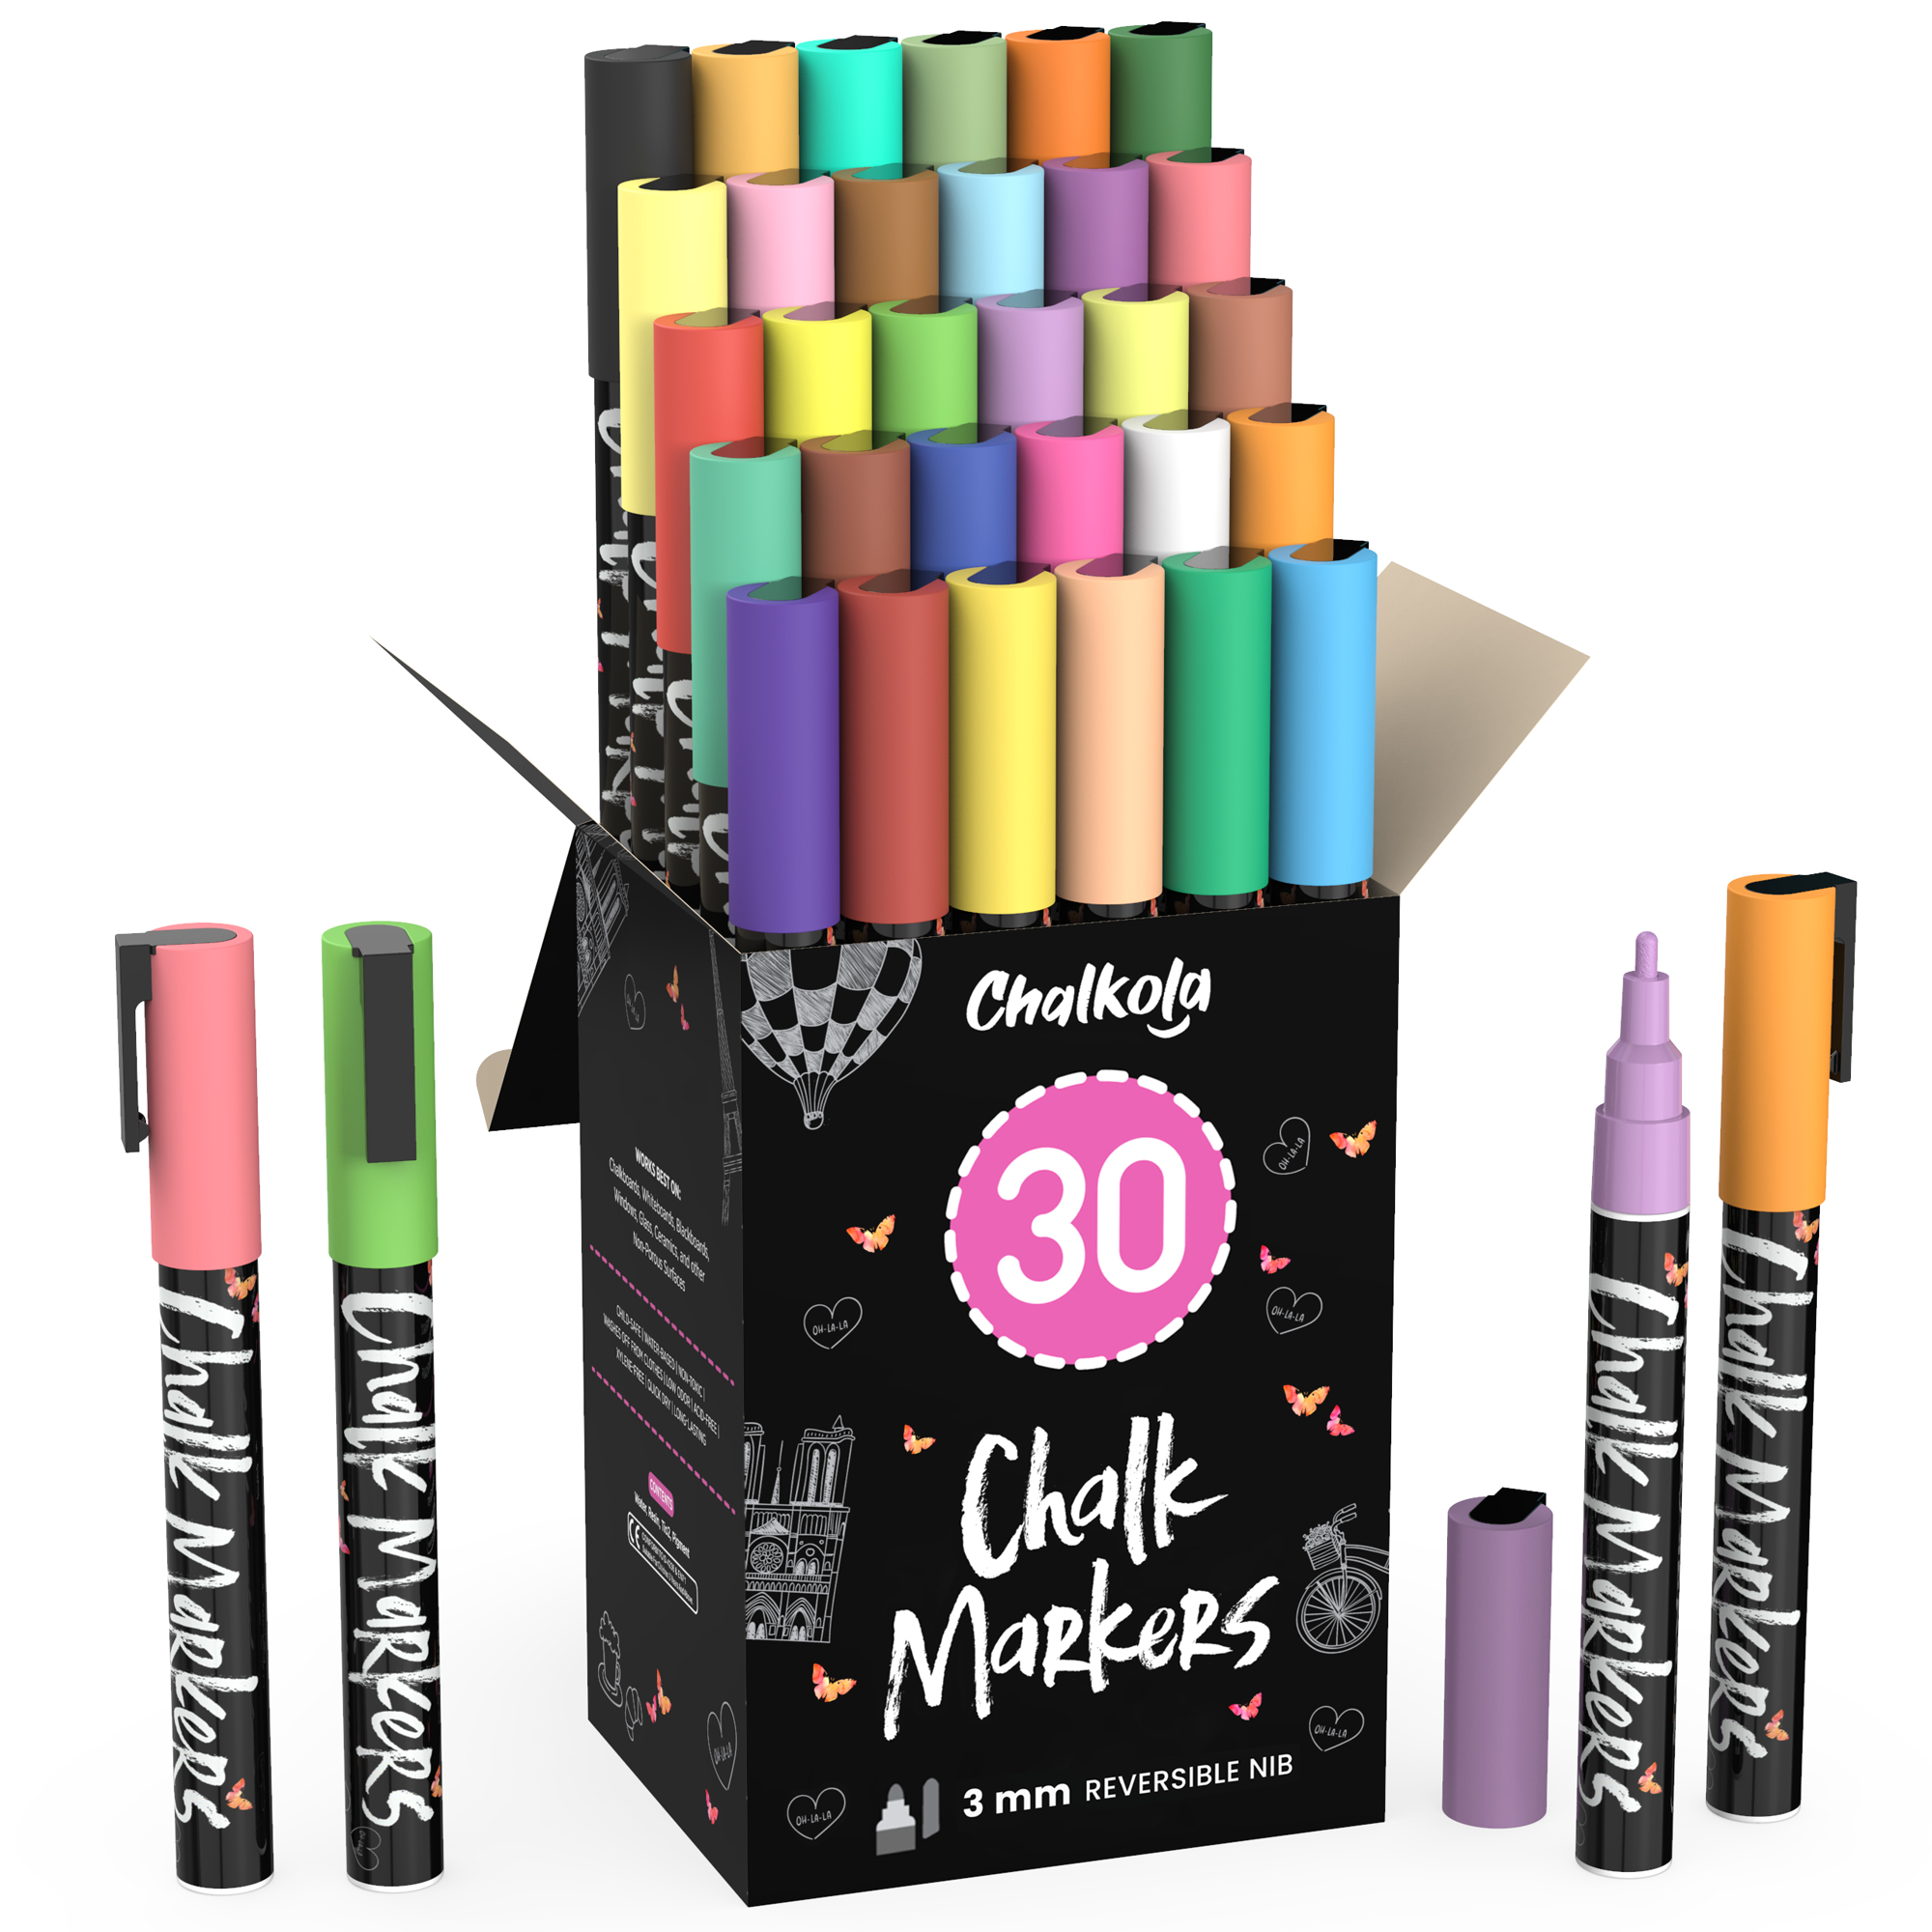 Chalk Markers Vs Regular Chalk - Chalkola Art Supply